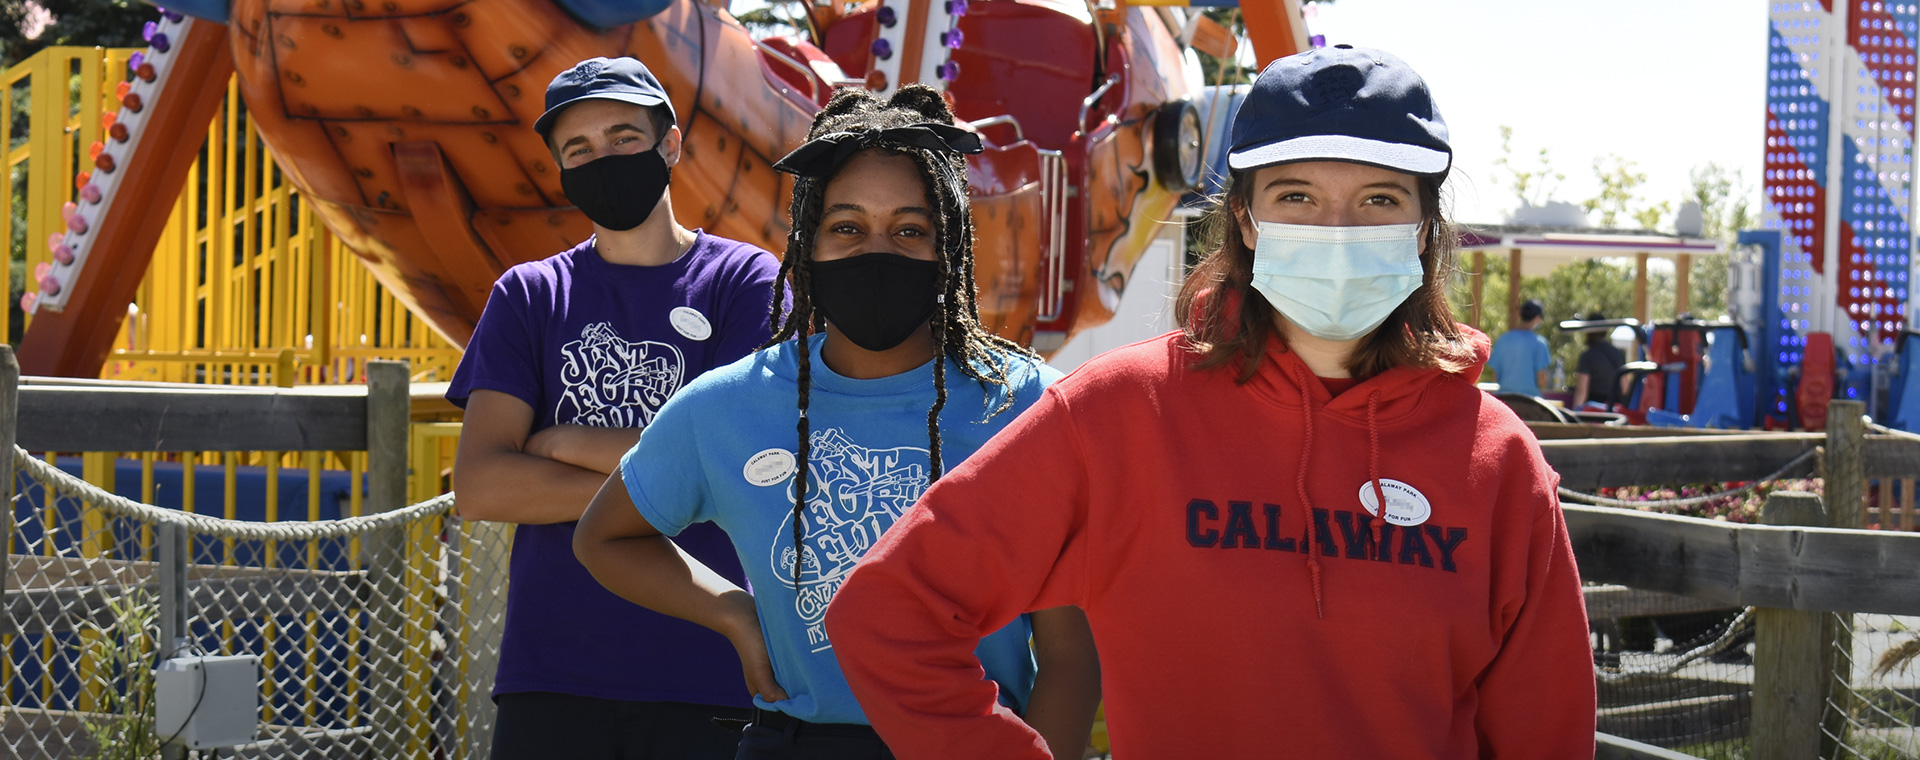 Calaway Park Employees wearing masks